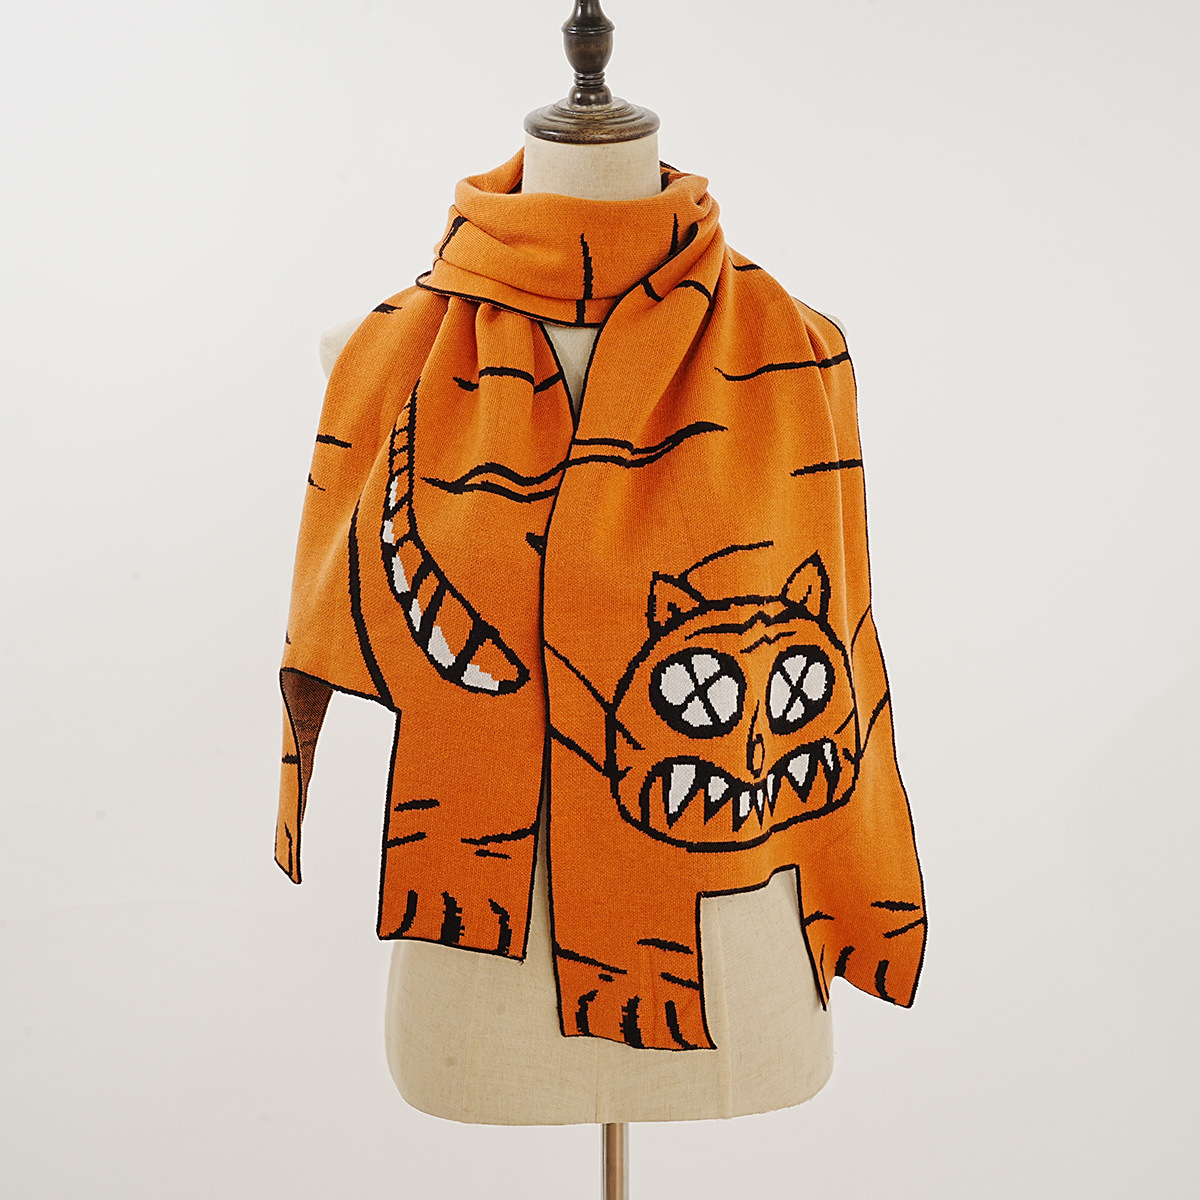 Unisex Orange Jacquard Knitted Wool Cartoon Tiger Shape Halloween Gift Warm Scarf